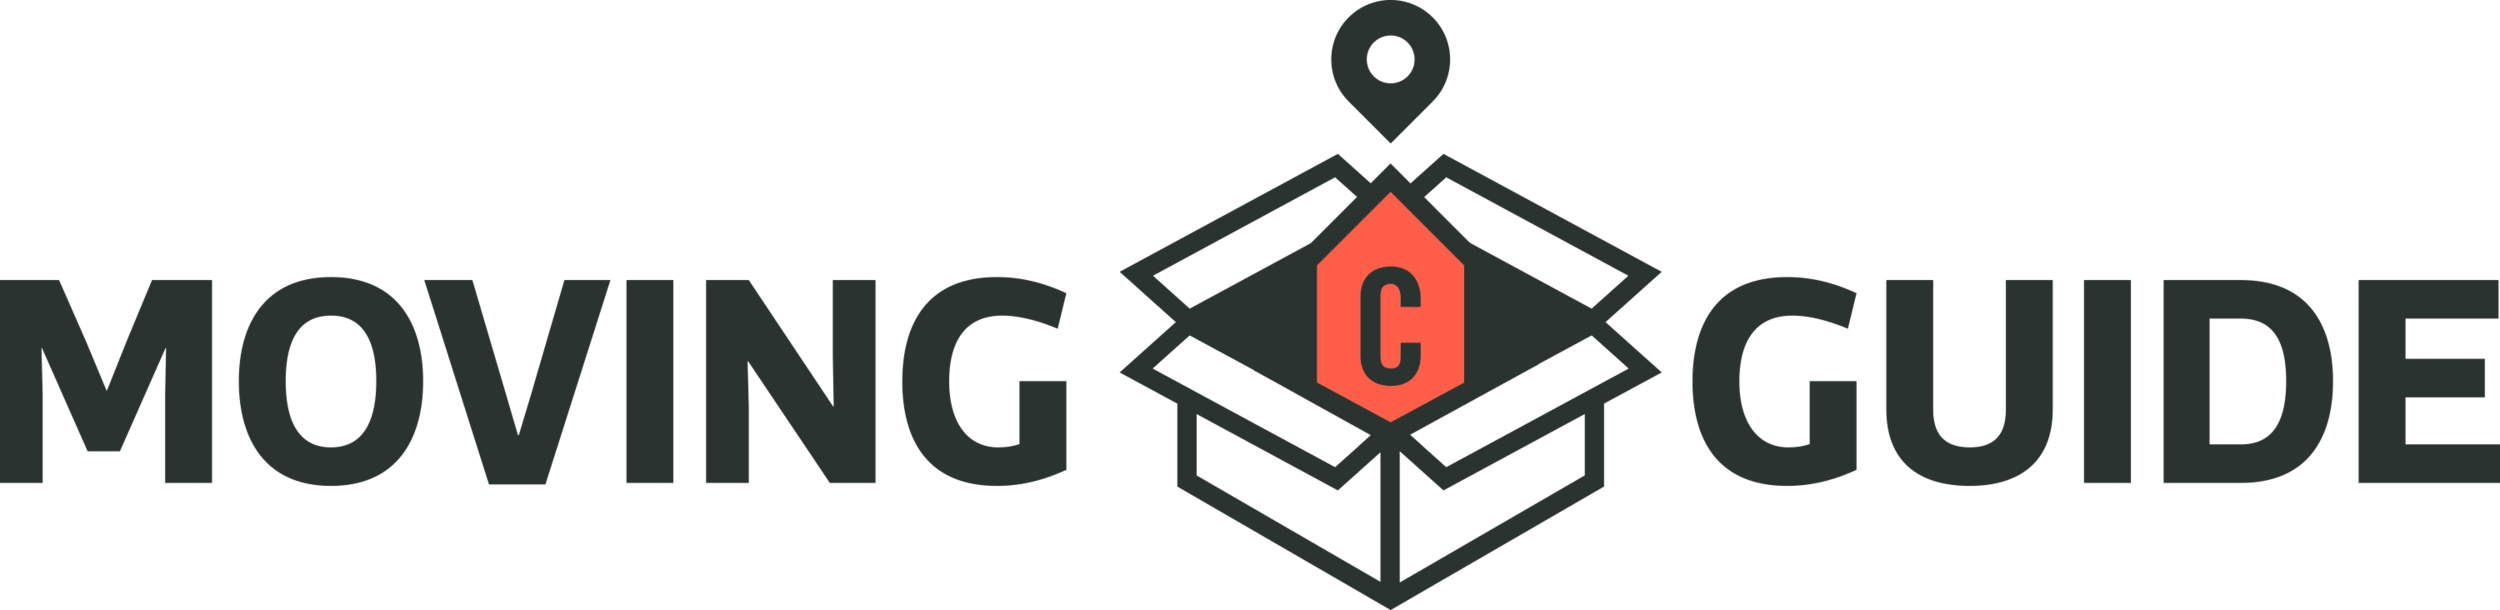 MovingGuide_Logo.png